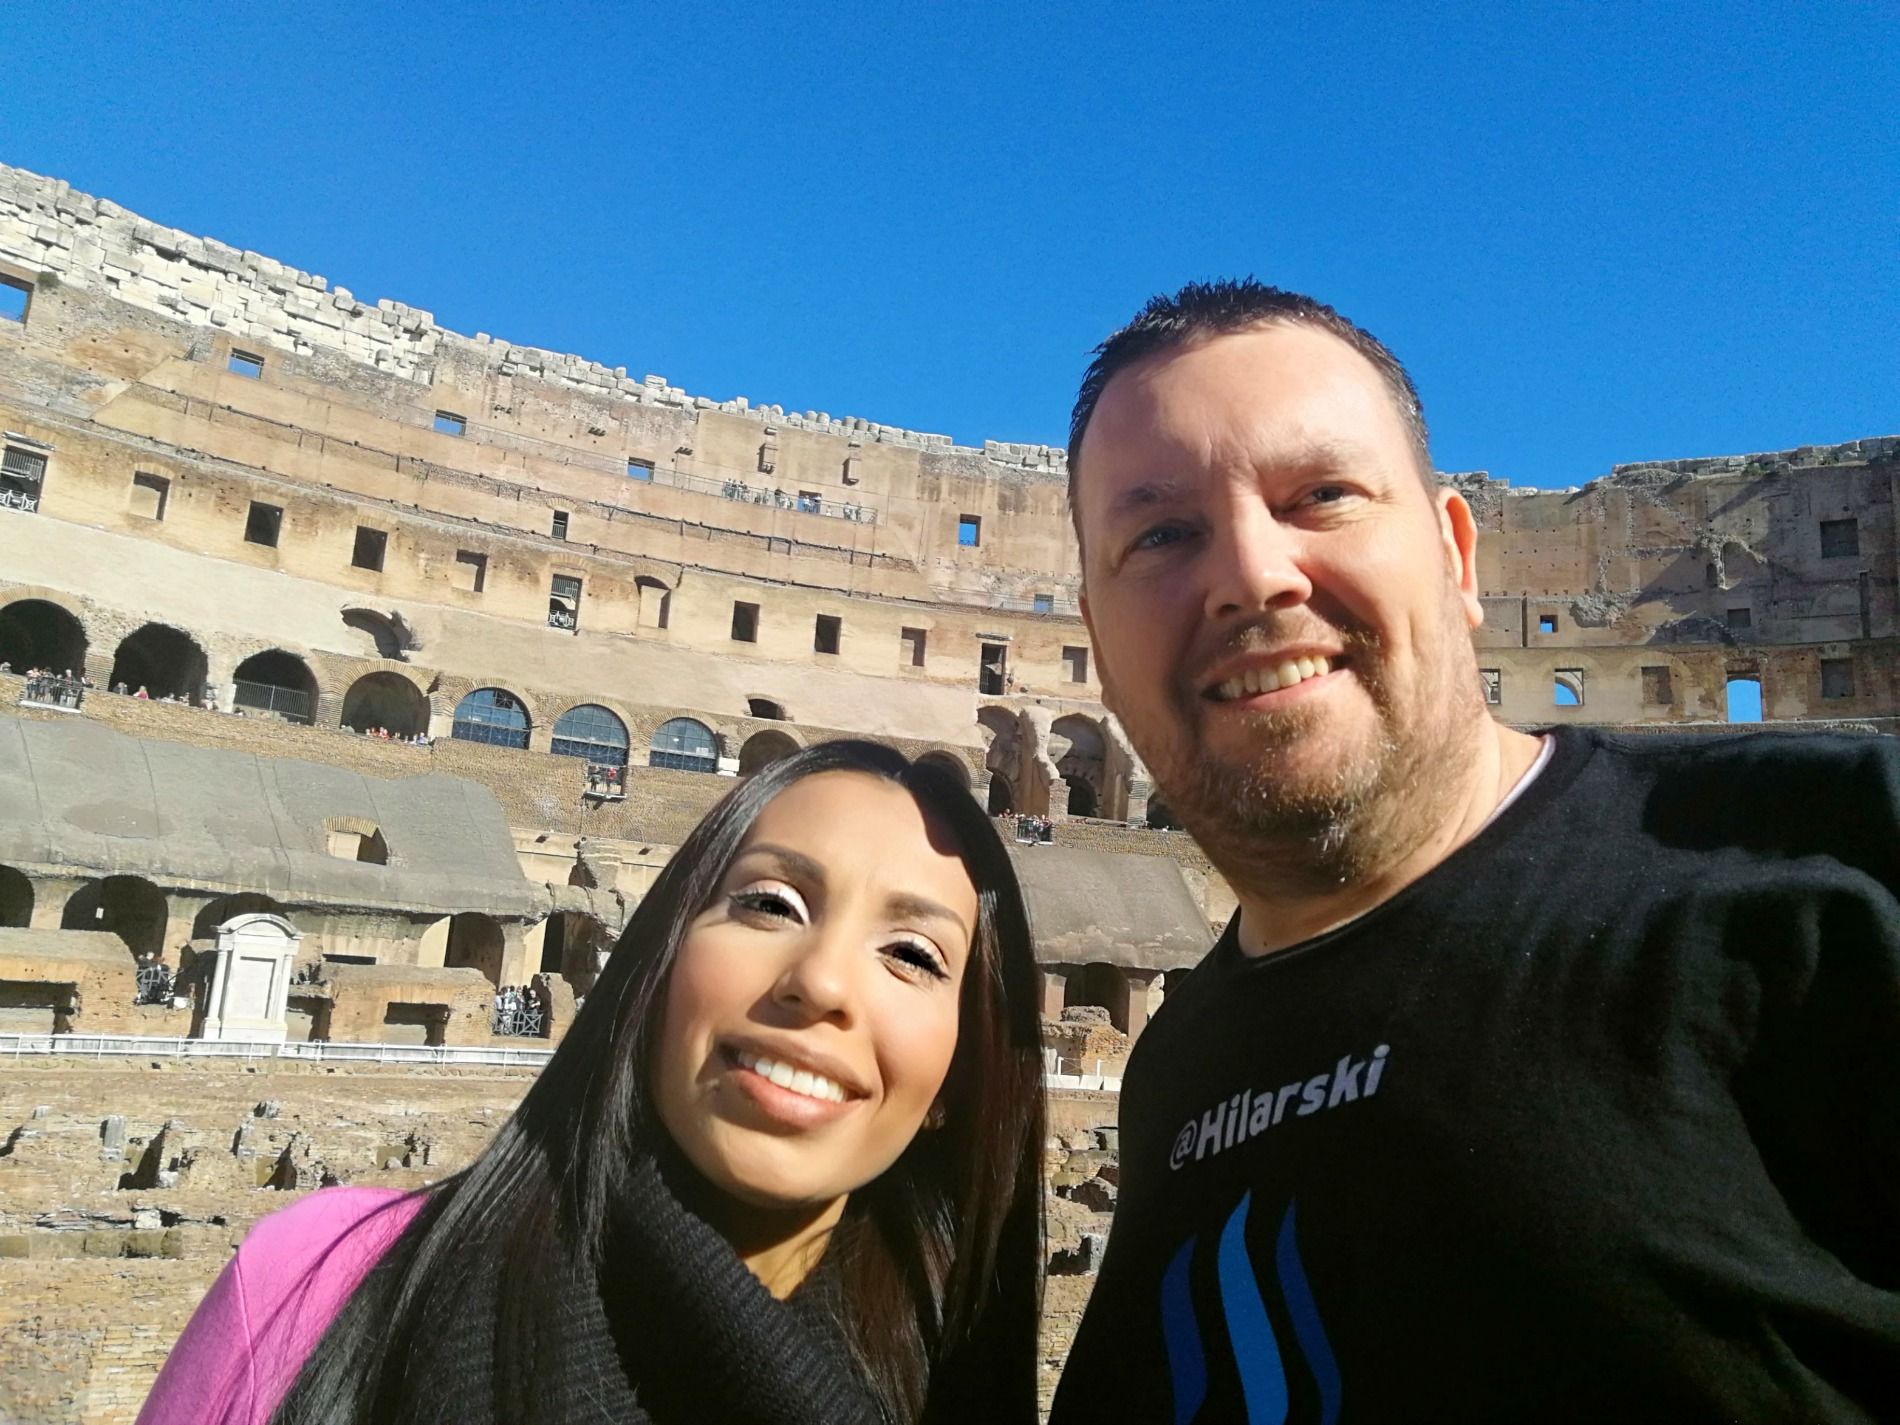 Coliseo-Roma-travel-anabell-hilarski04.jpg